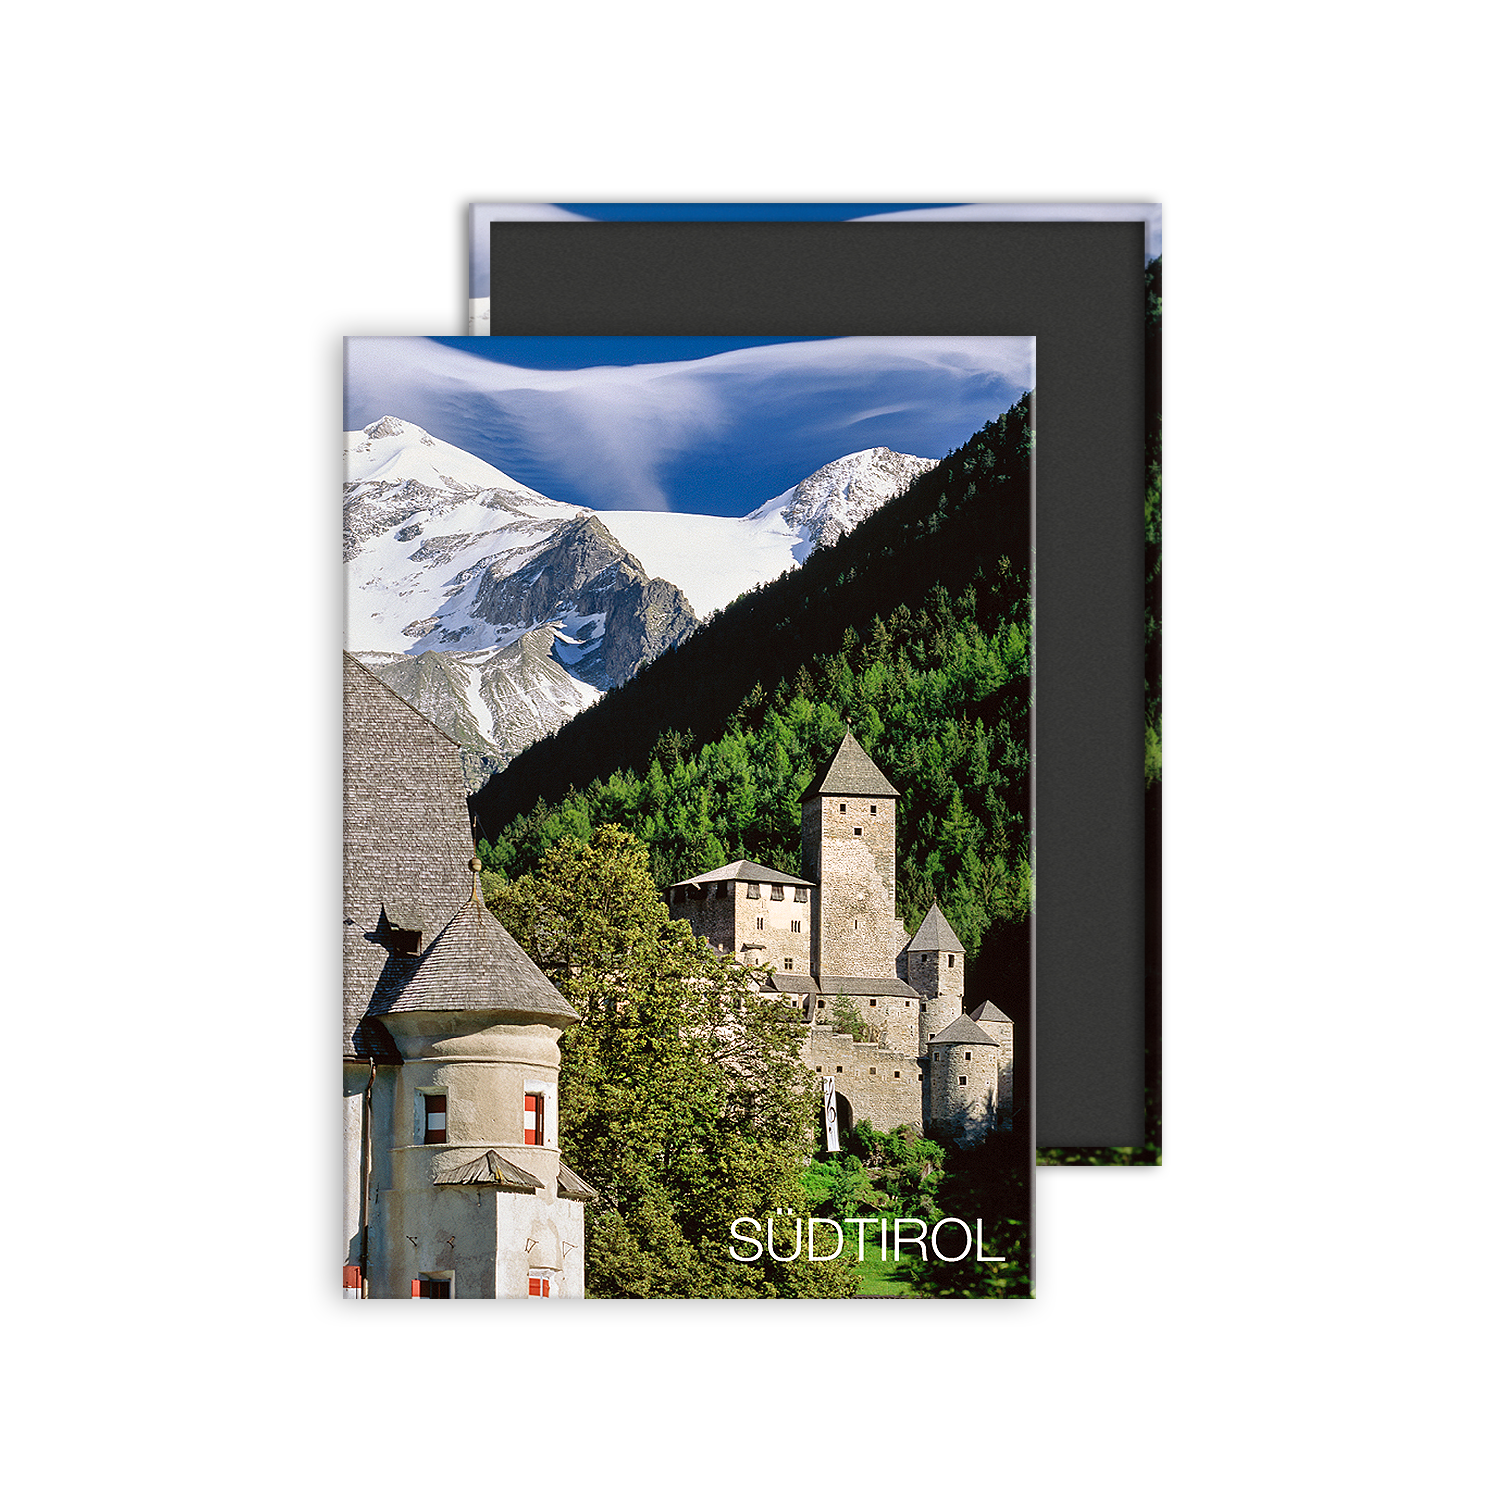 BZ M 012 - Südtirol, Val Pusteria (Pustertal)